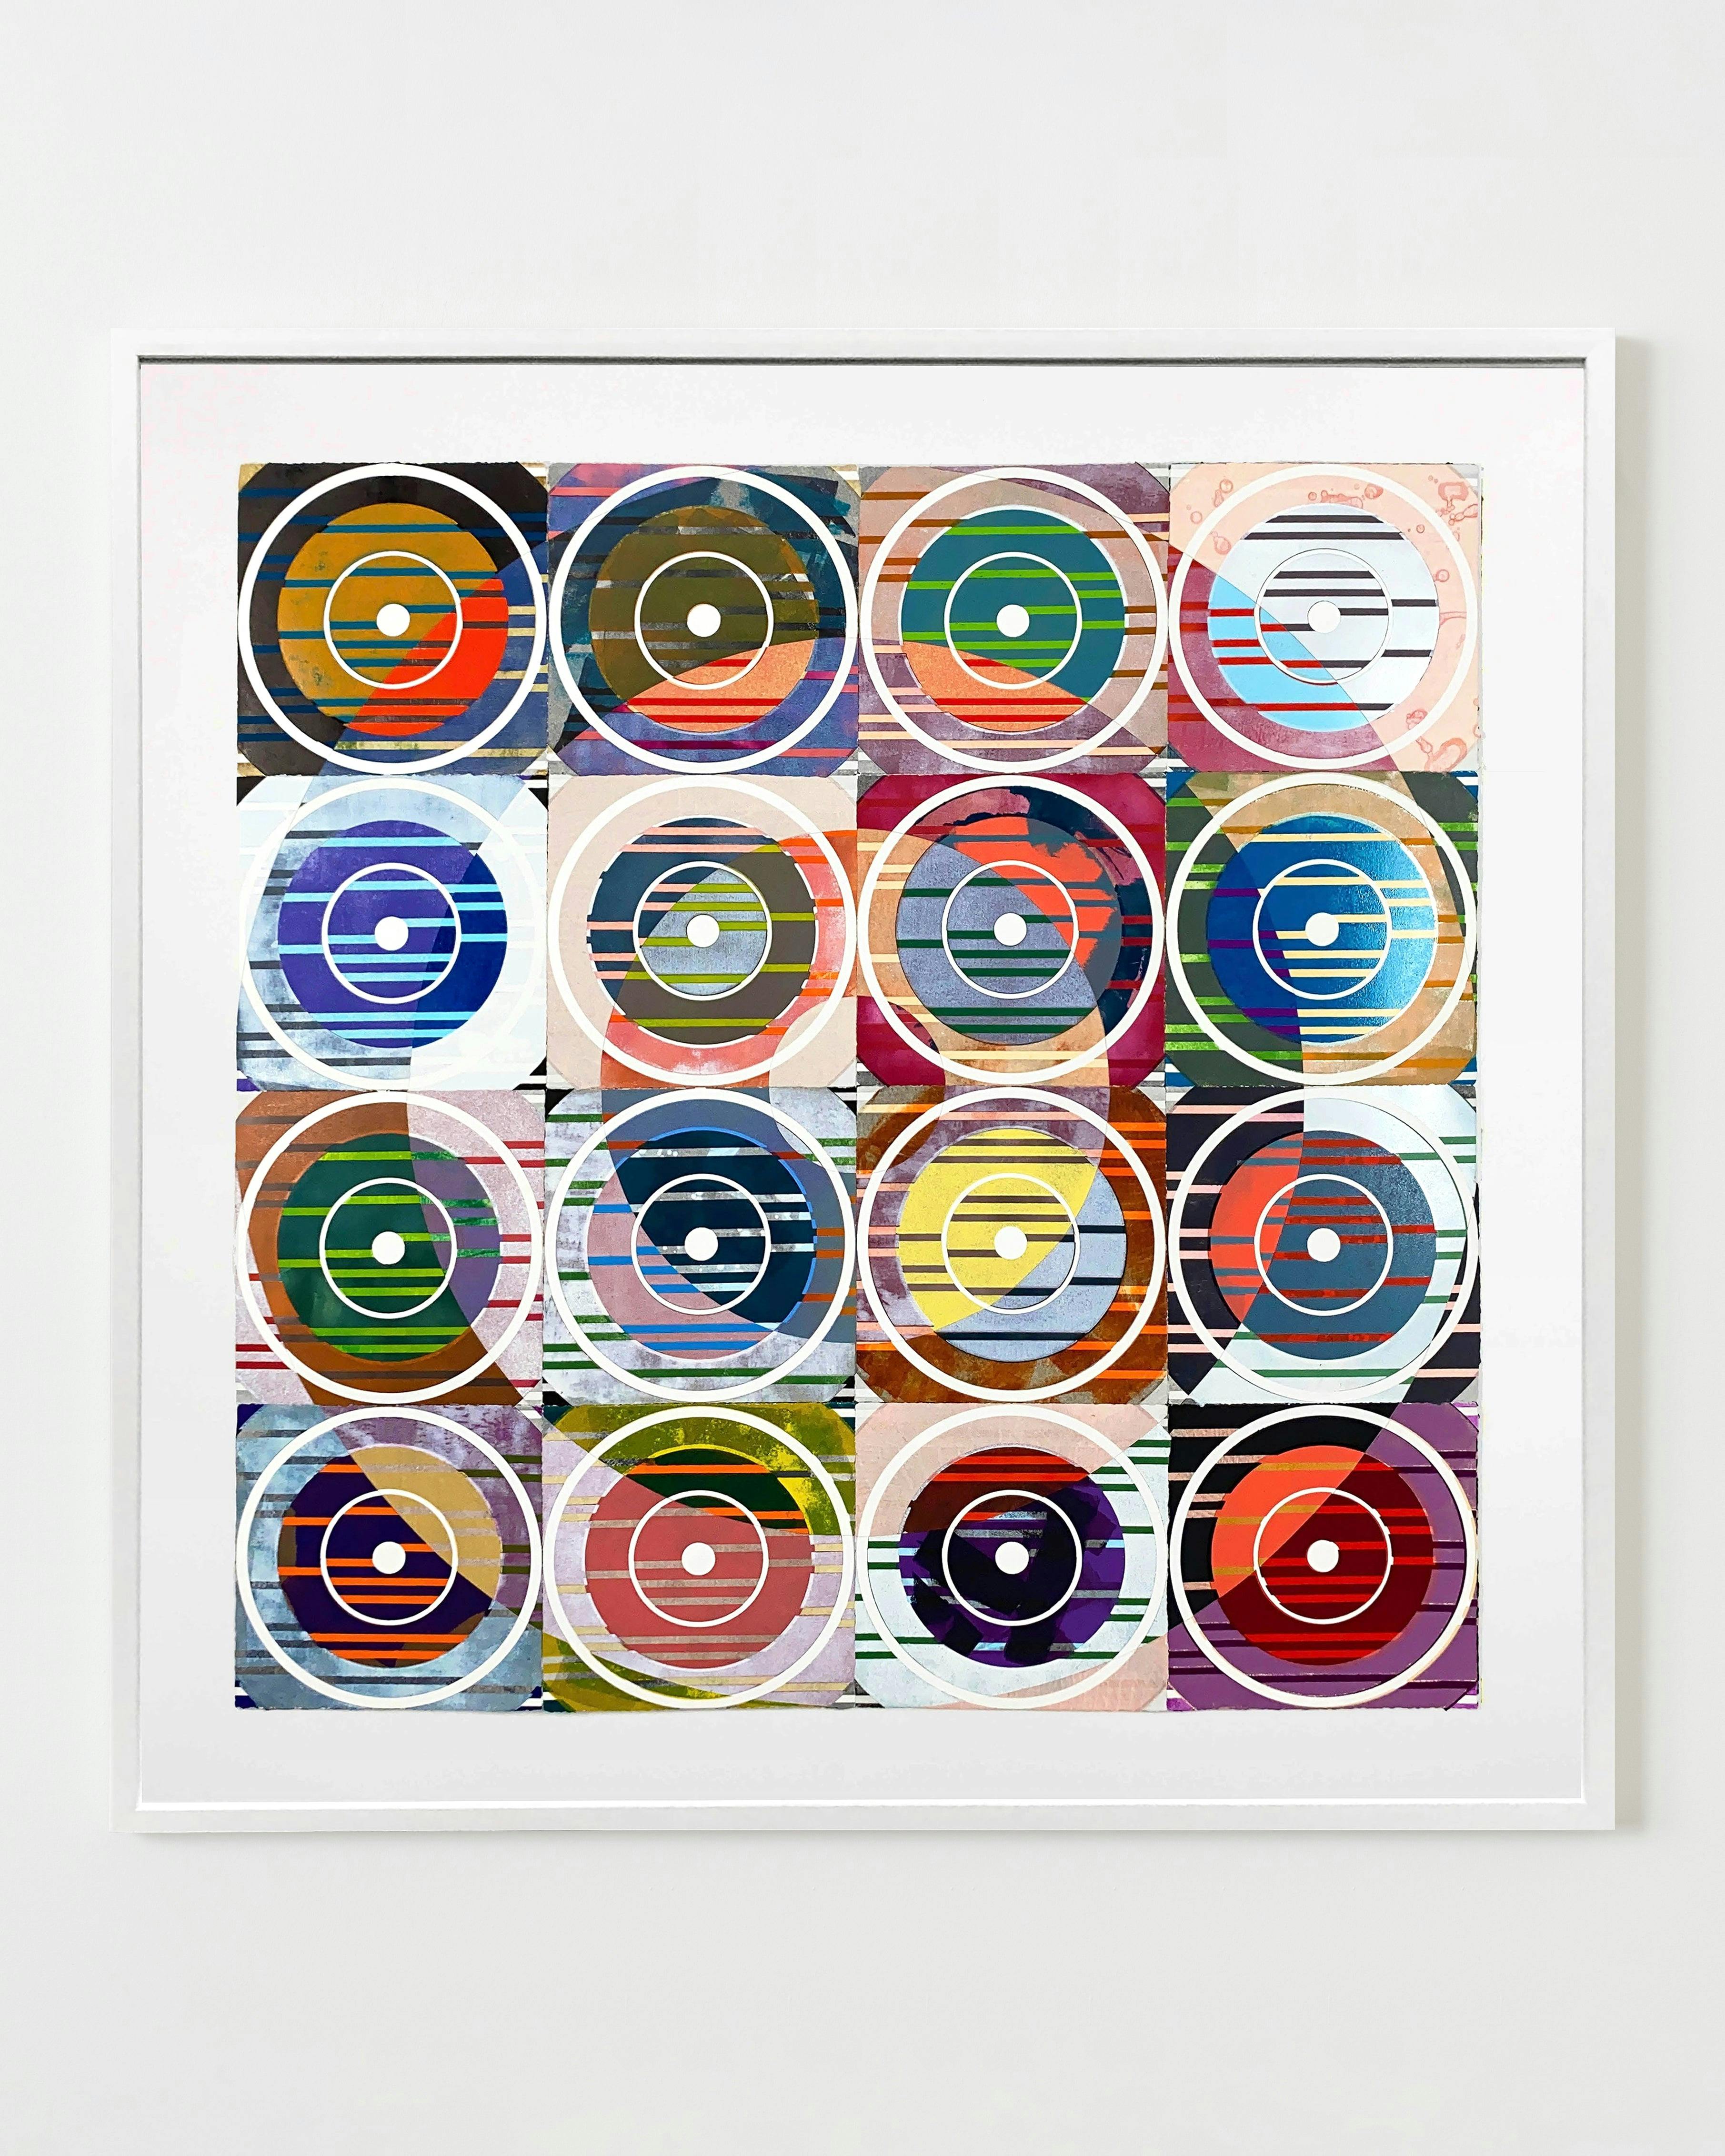 Print by Matt Neuman titled "Untitled Target Collage".